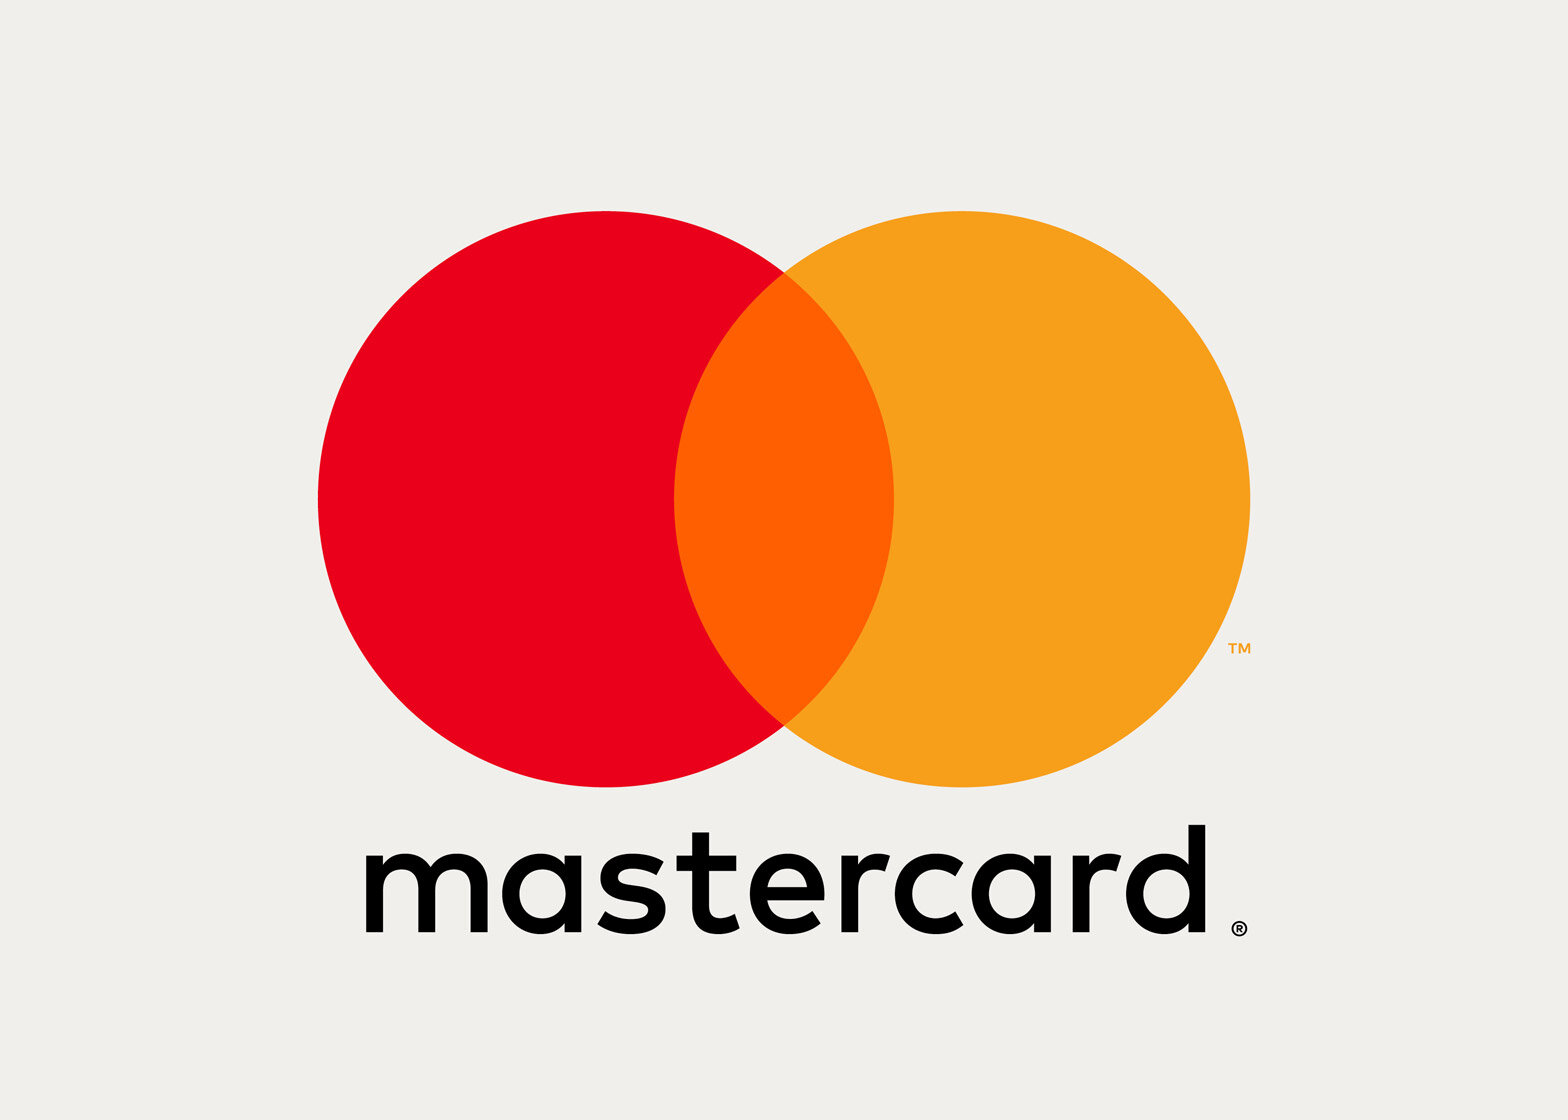 mastercard-logo-redesign-pentagram_dezeen_1568_1.jpg